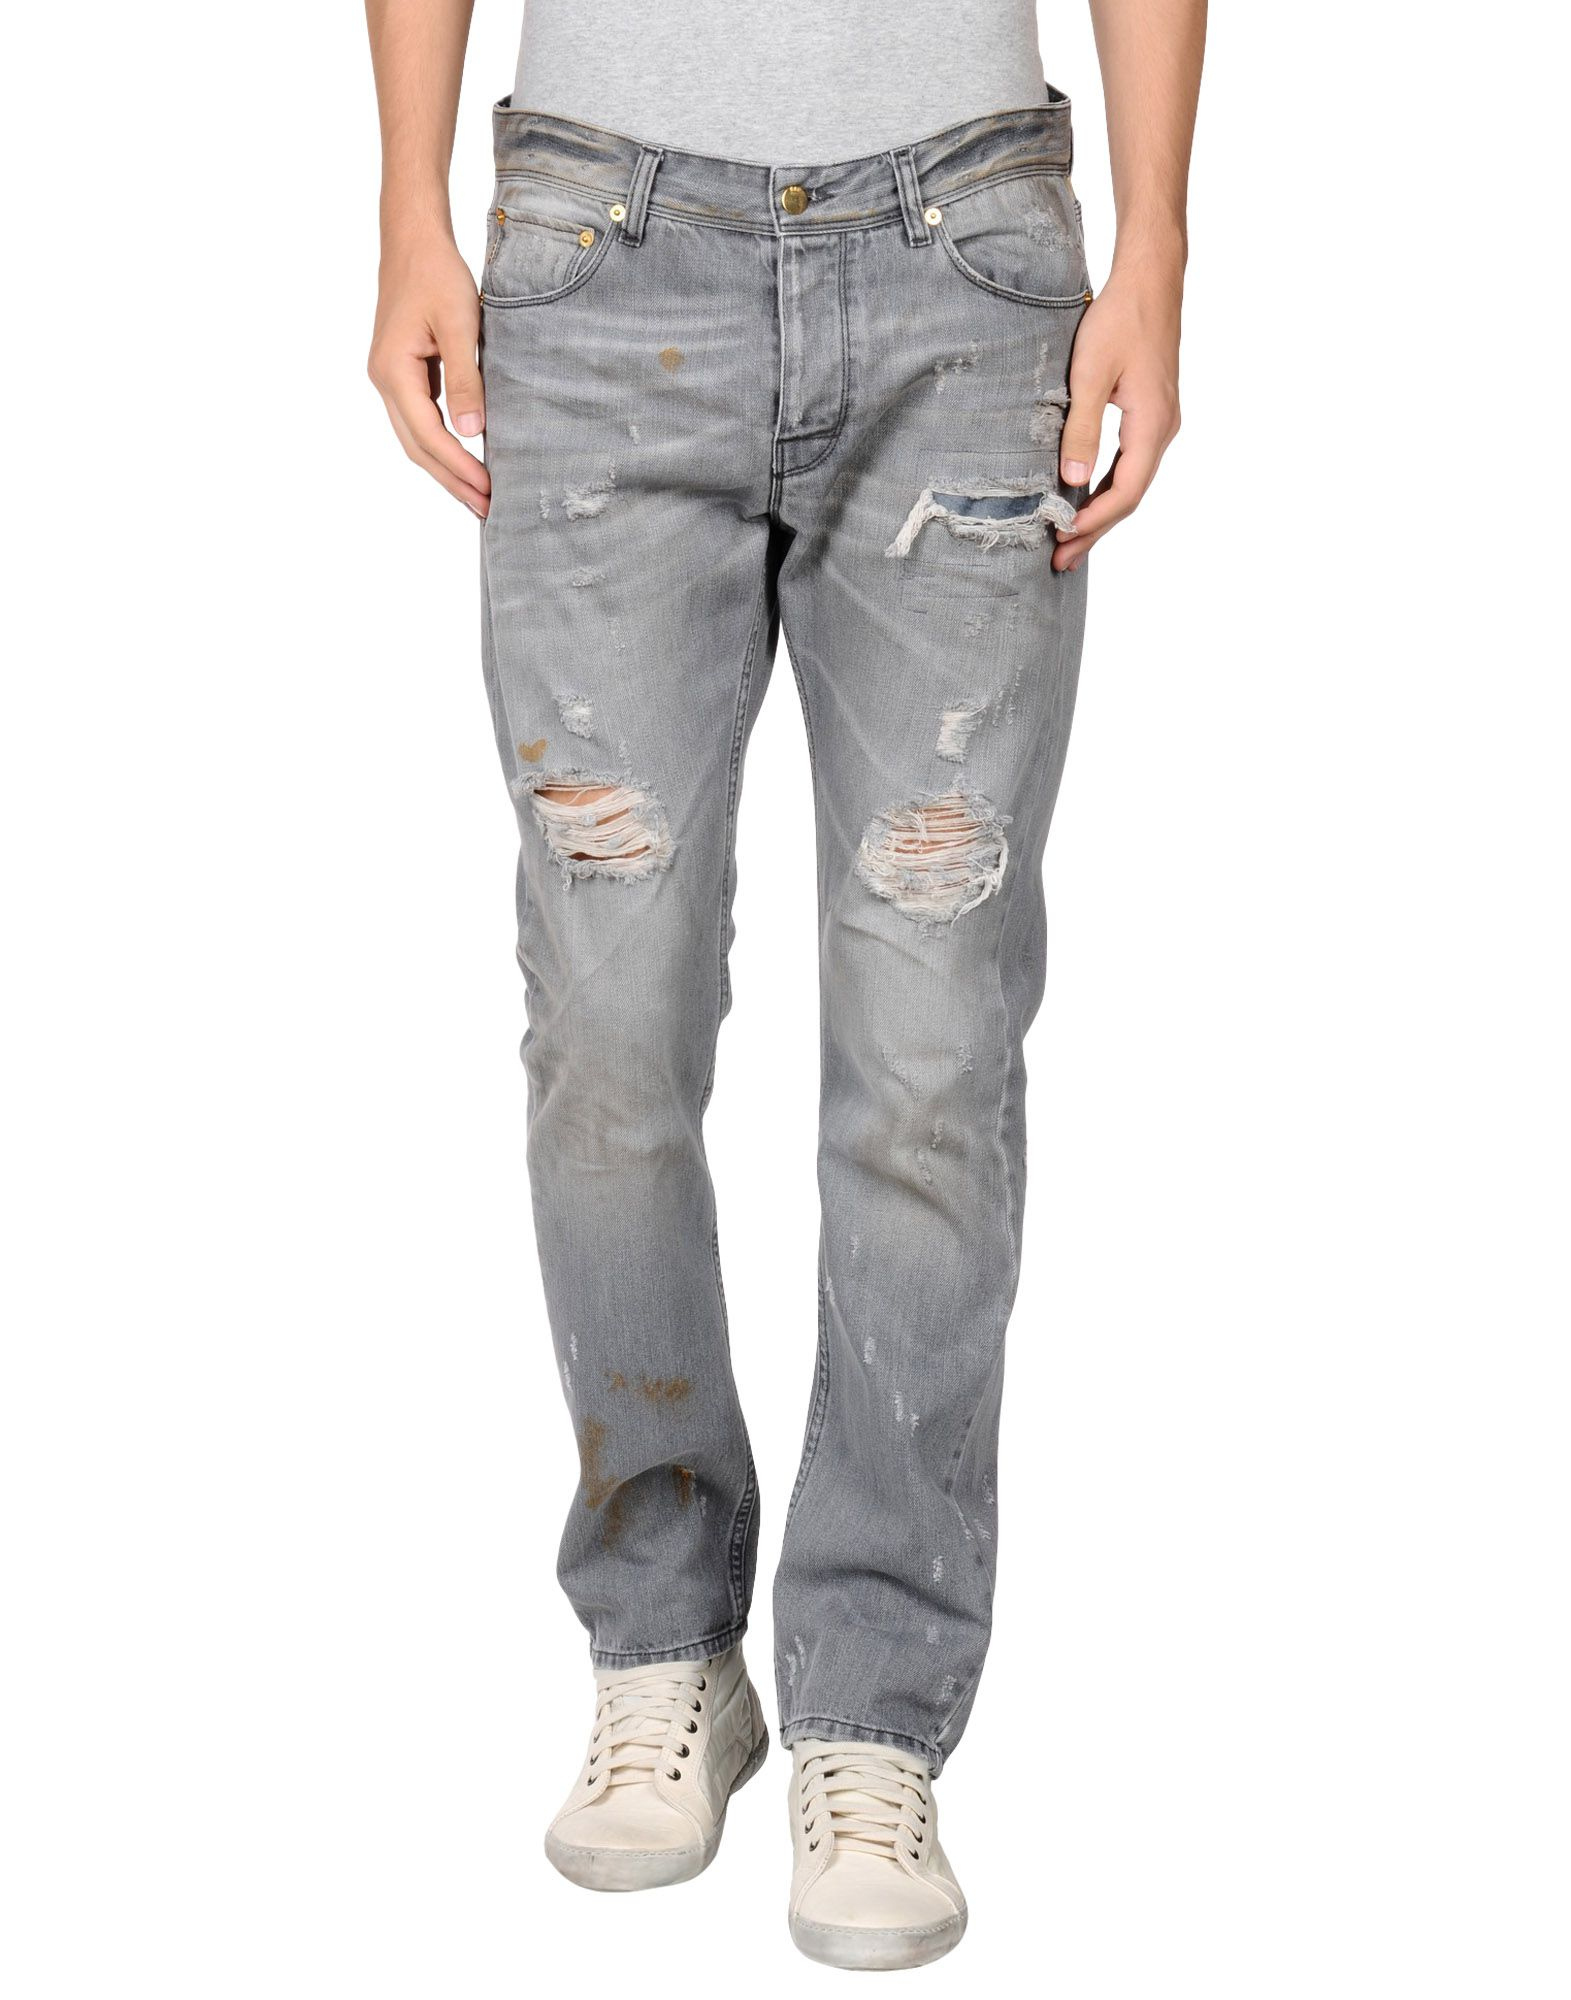 Raf Simons Regular Jeans in Grey (Grey) for Men - Lyst